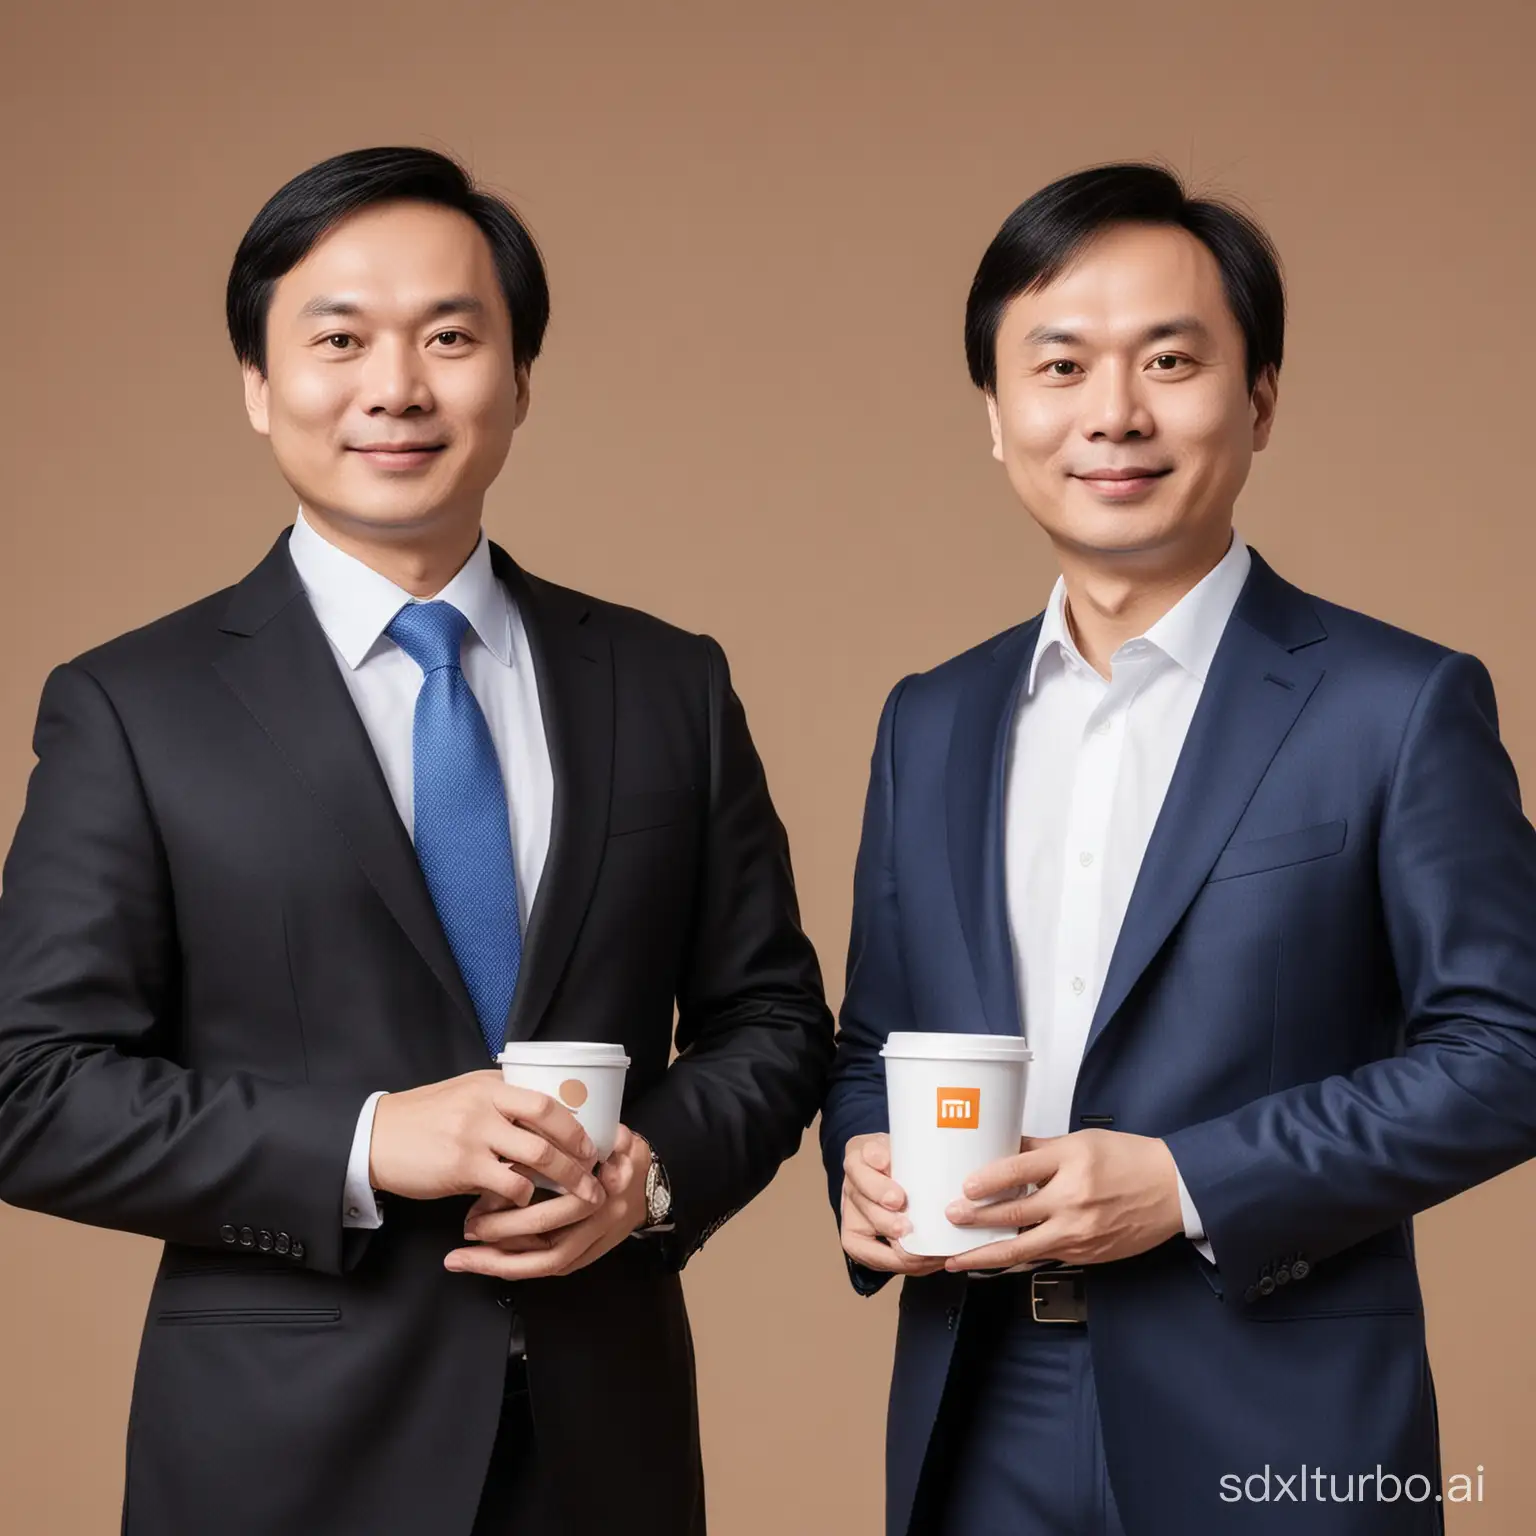 A photo of Lei Jun and Jing Kong, from Xiaomi Corporation.